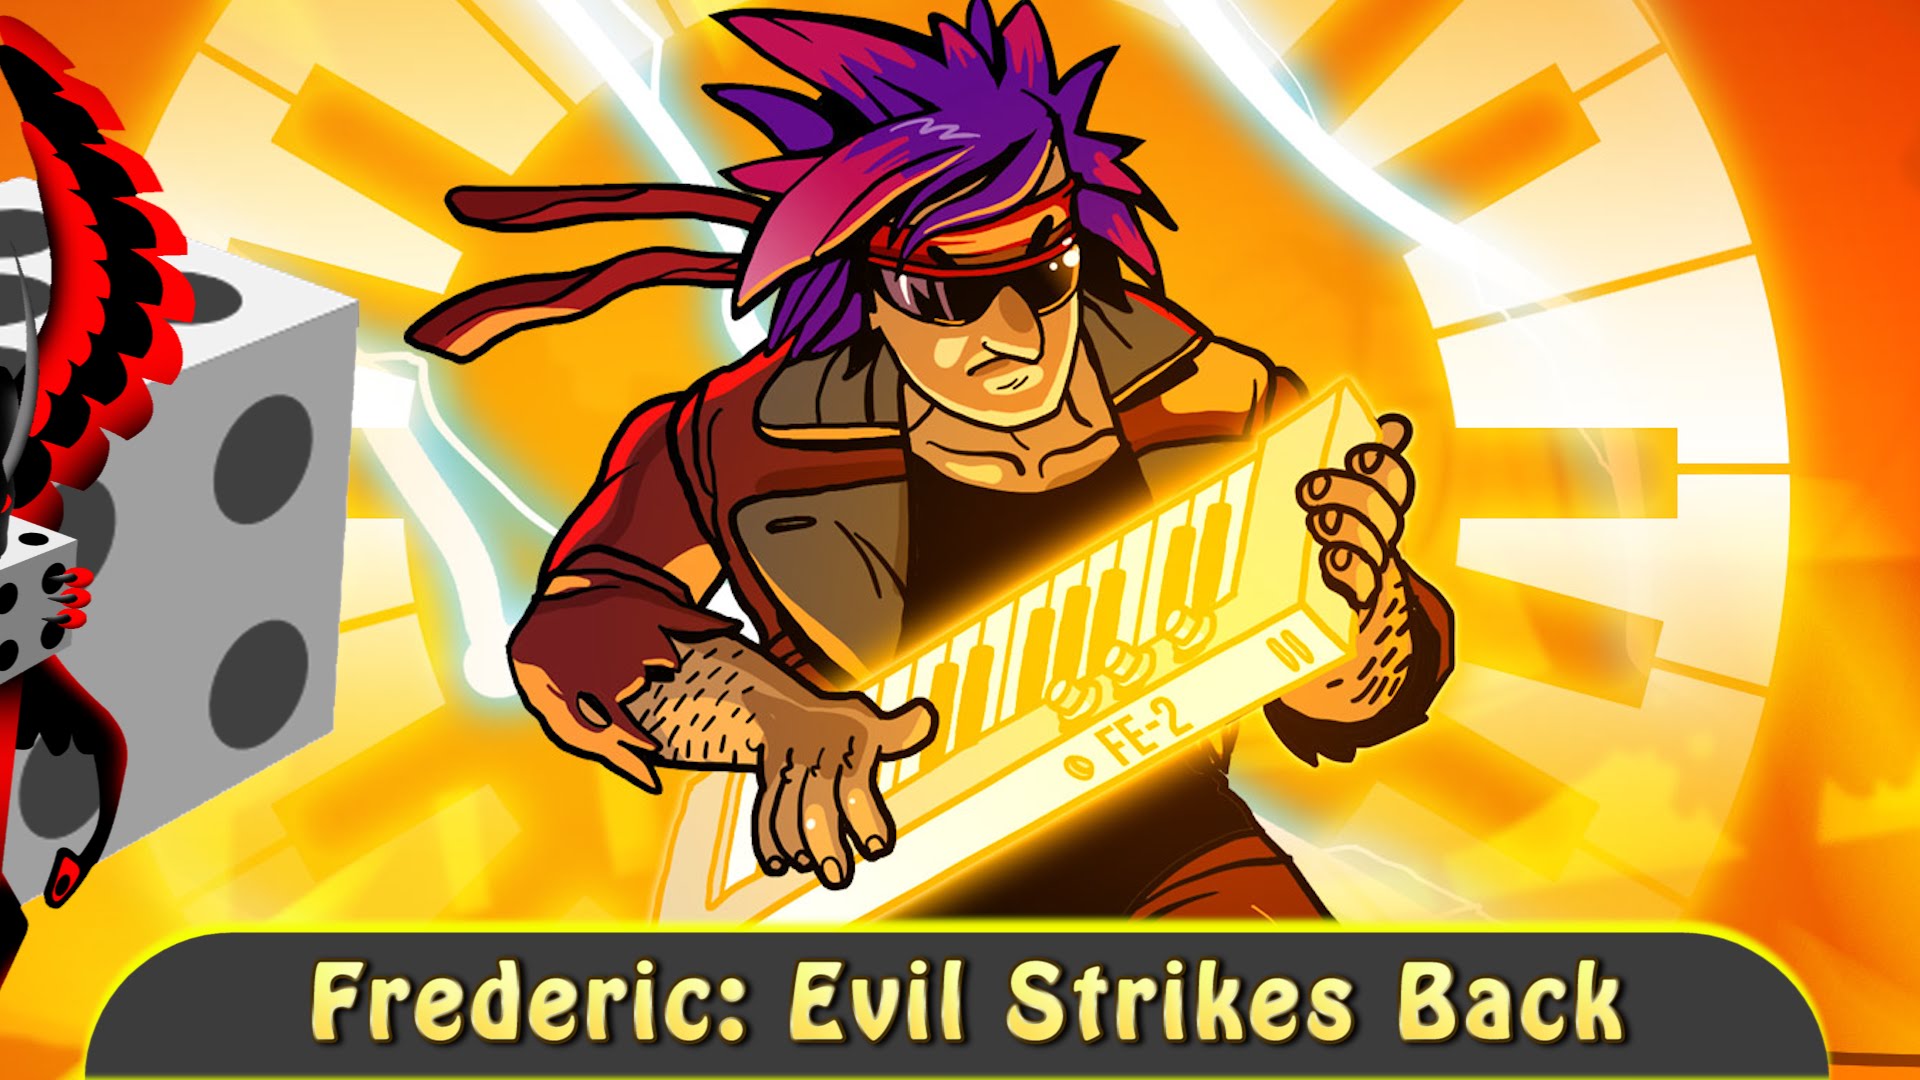 Frederic: Evil Strikes Back #19